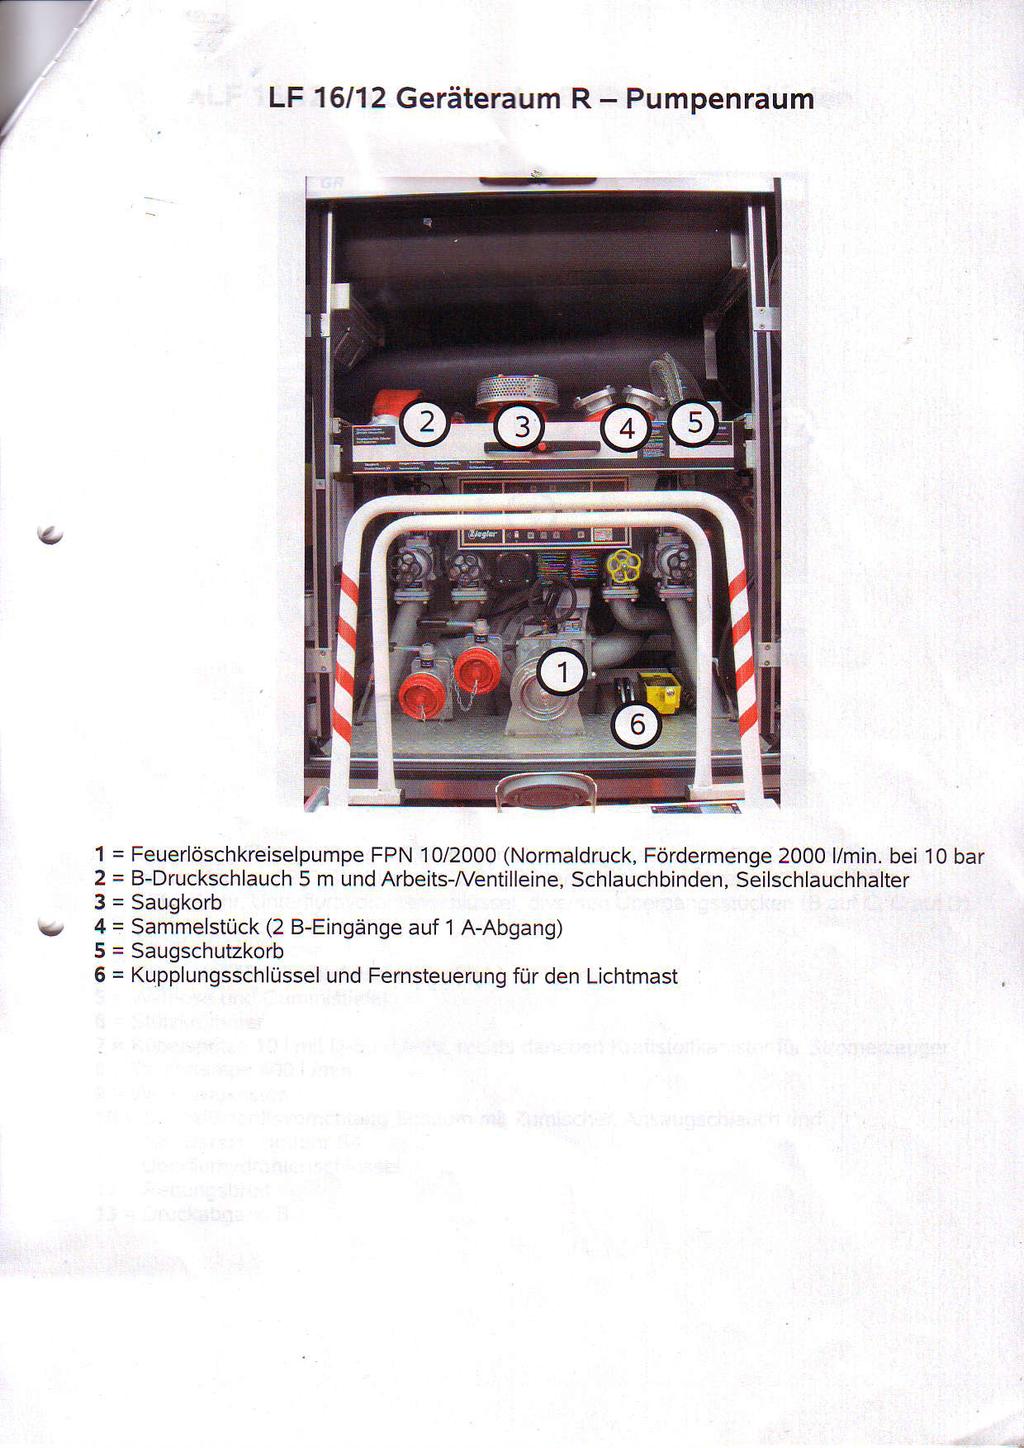 LF 16112 Geräteraum R - Pumpenraum I 1 = Feuerlöschkreiselpumpe FPN 10/2000 (Normaldruck, Fördermenge 2000 l/min.